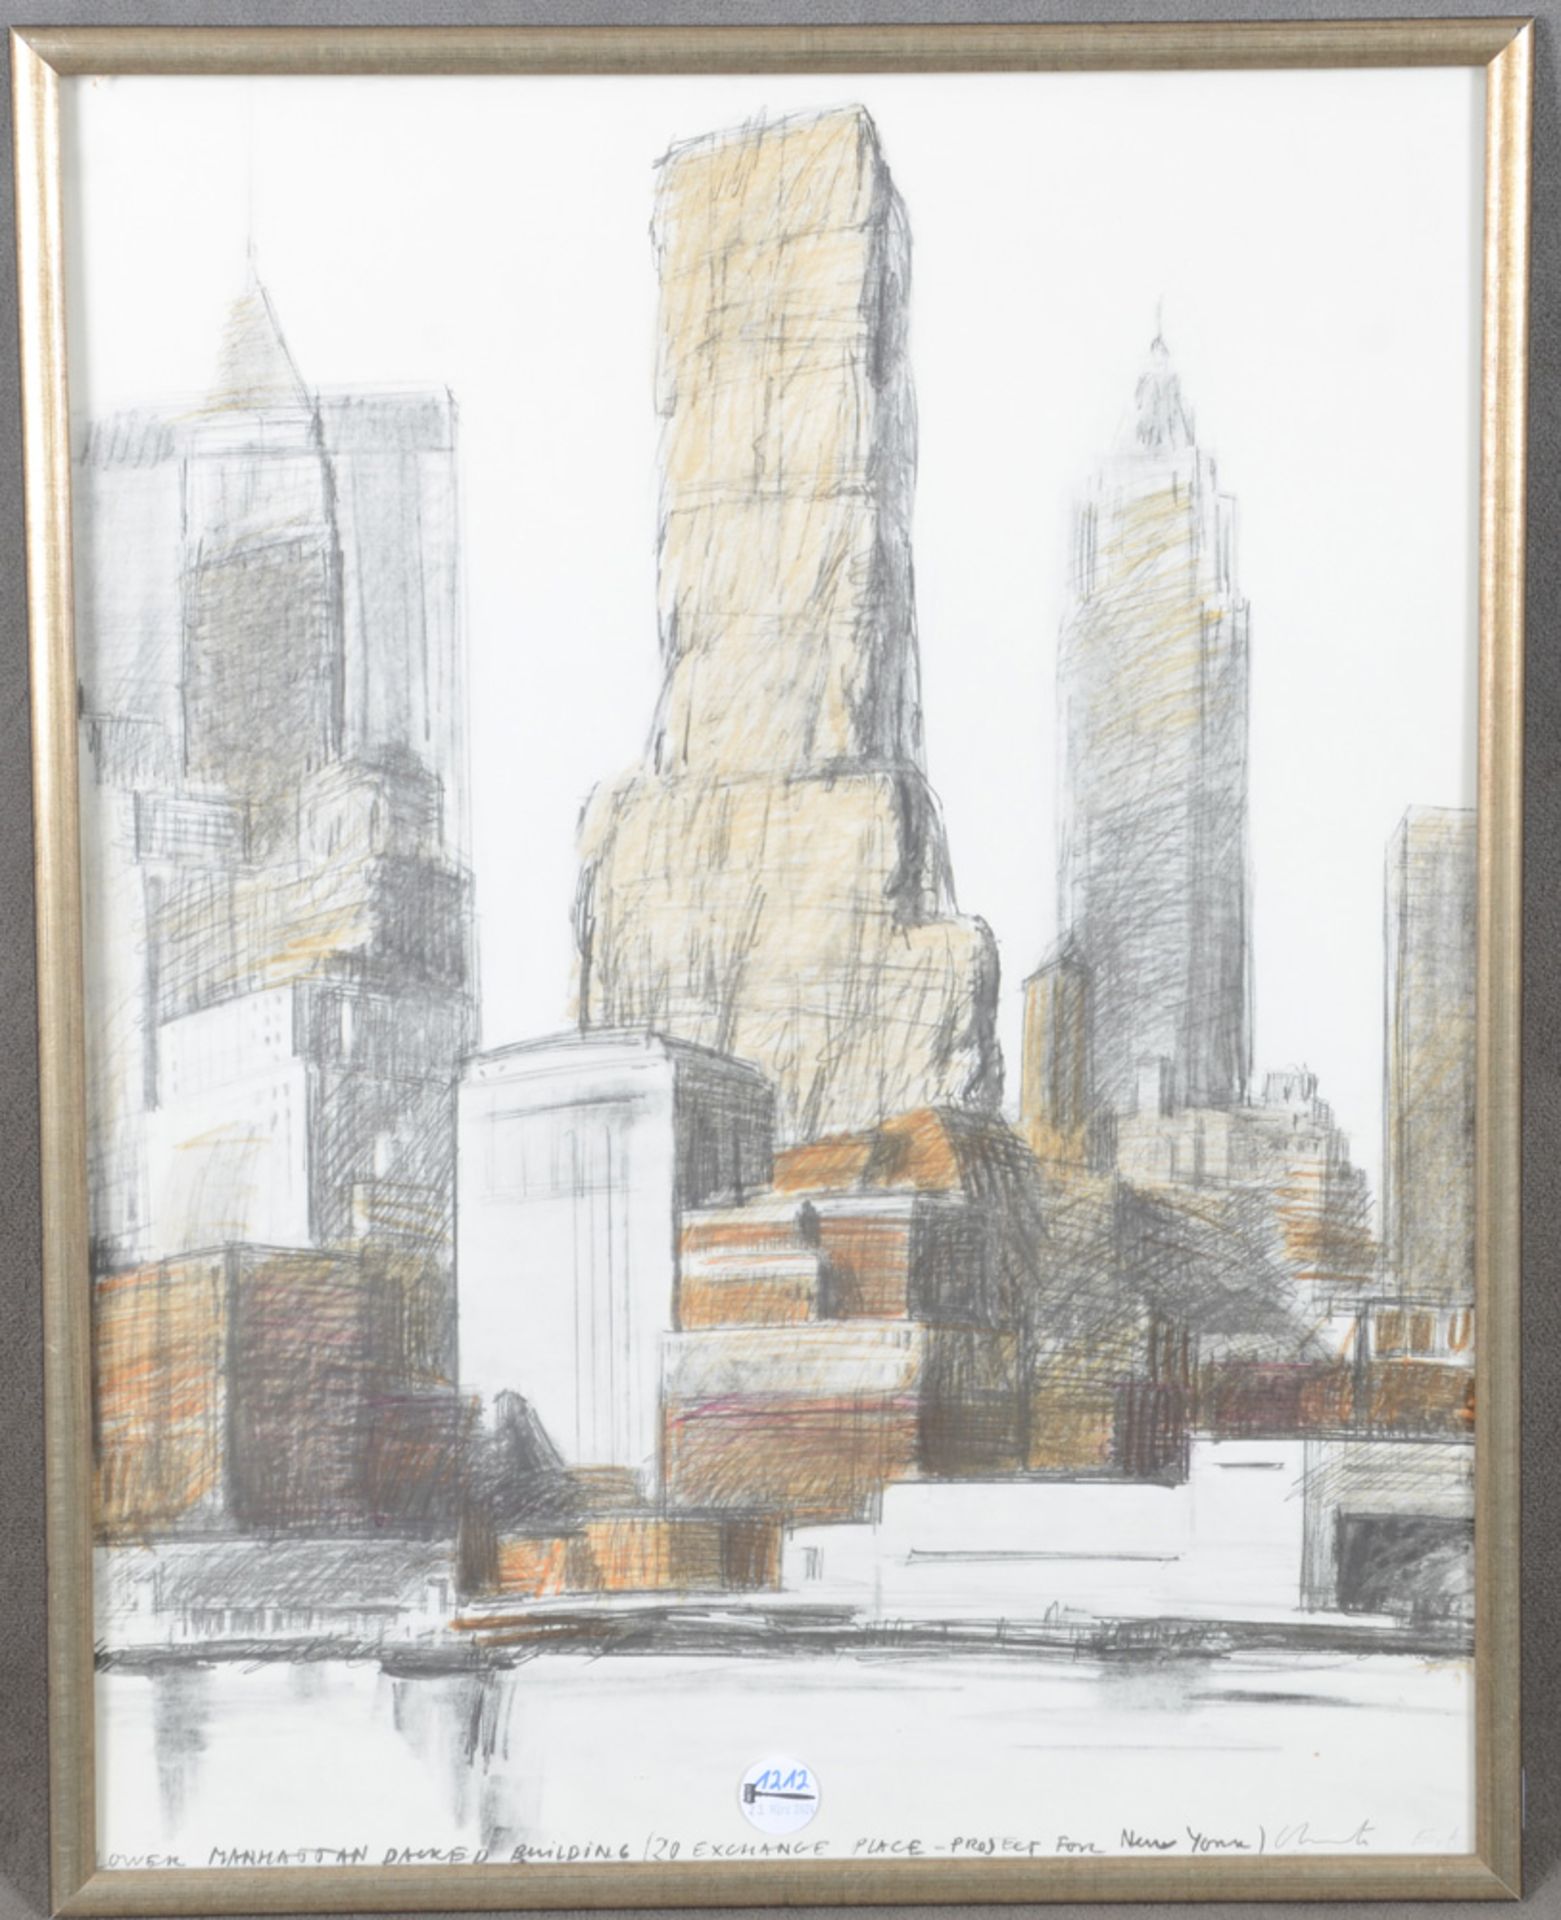 CHRISTO Vladimirov Javacheff (1935-2020). „Lower Manhattan Packed Building Project for New York“.